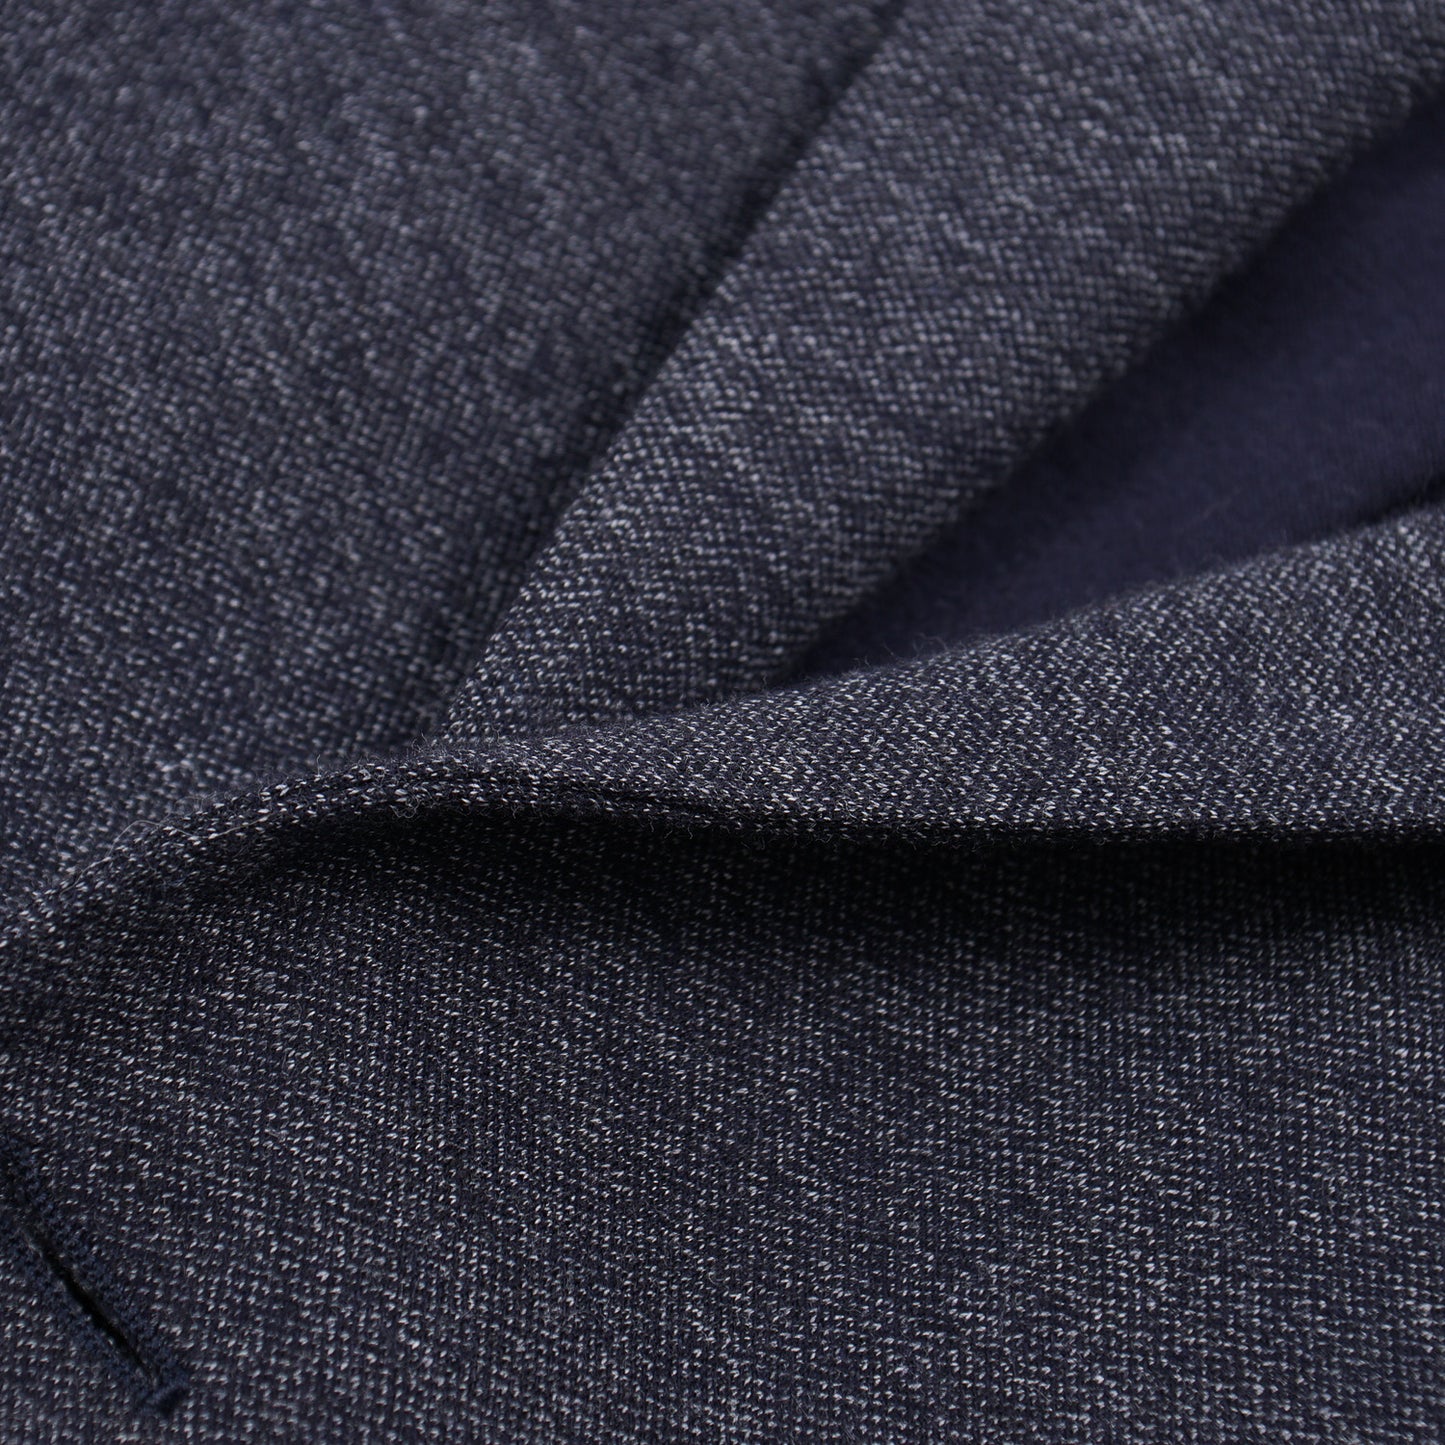 Boglioli Knit Jersey 'K Jacket' Suit - Top Shelf Apparel